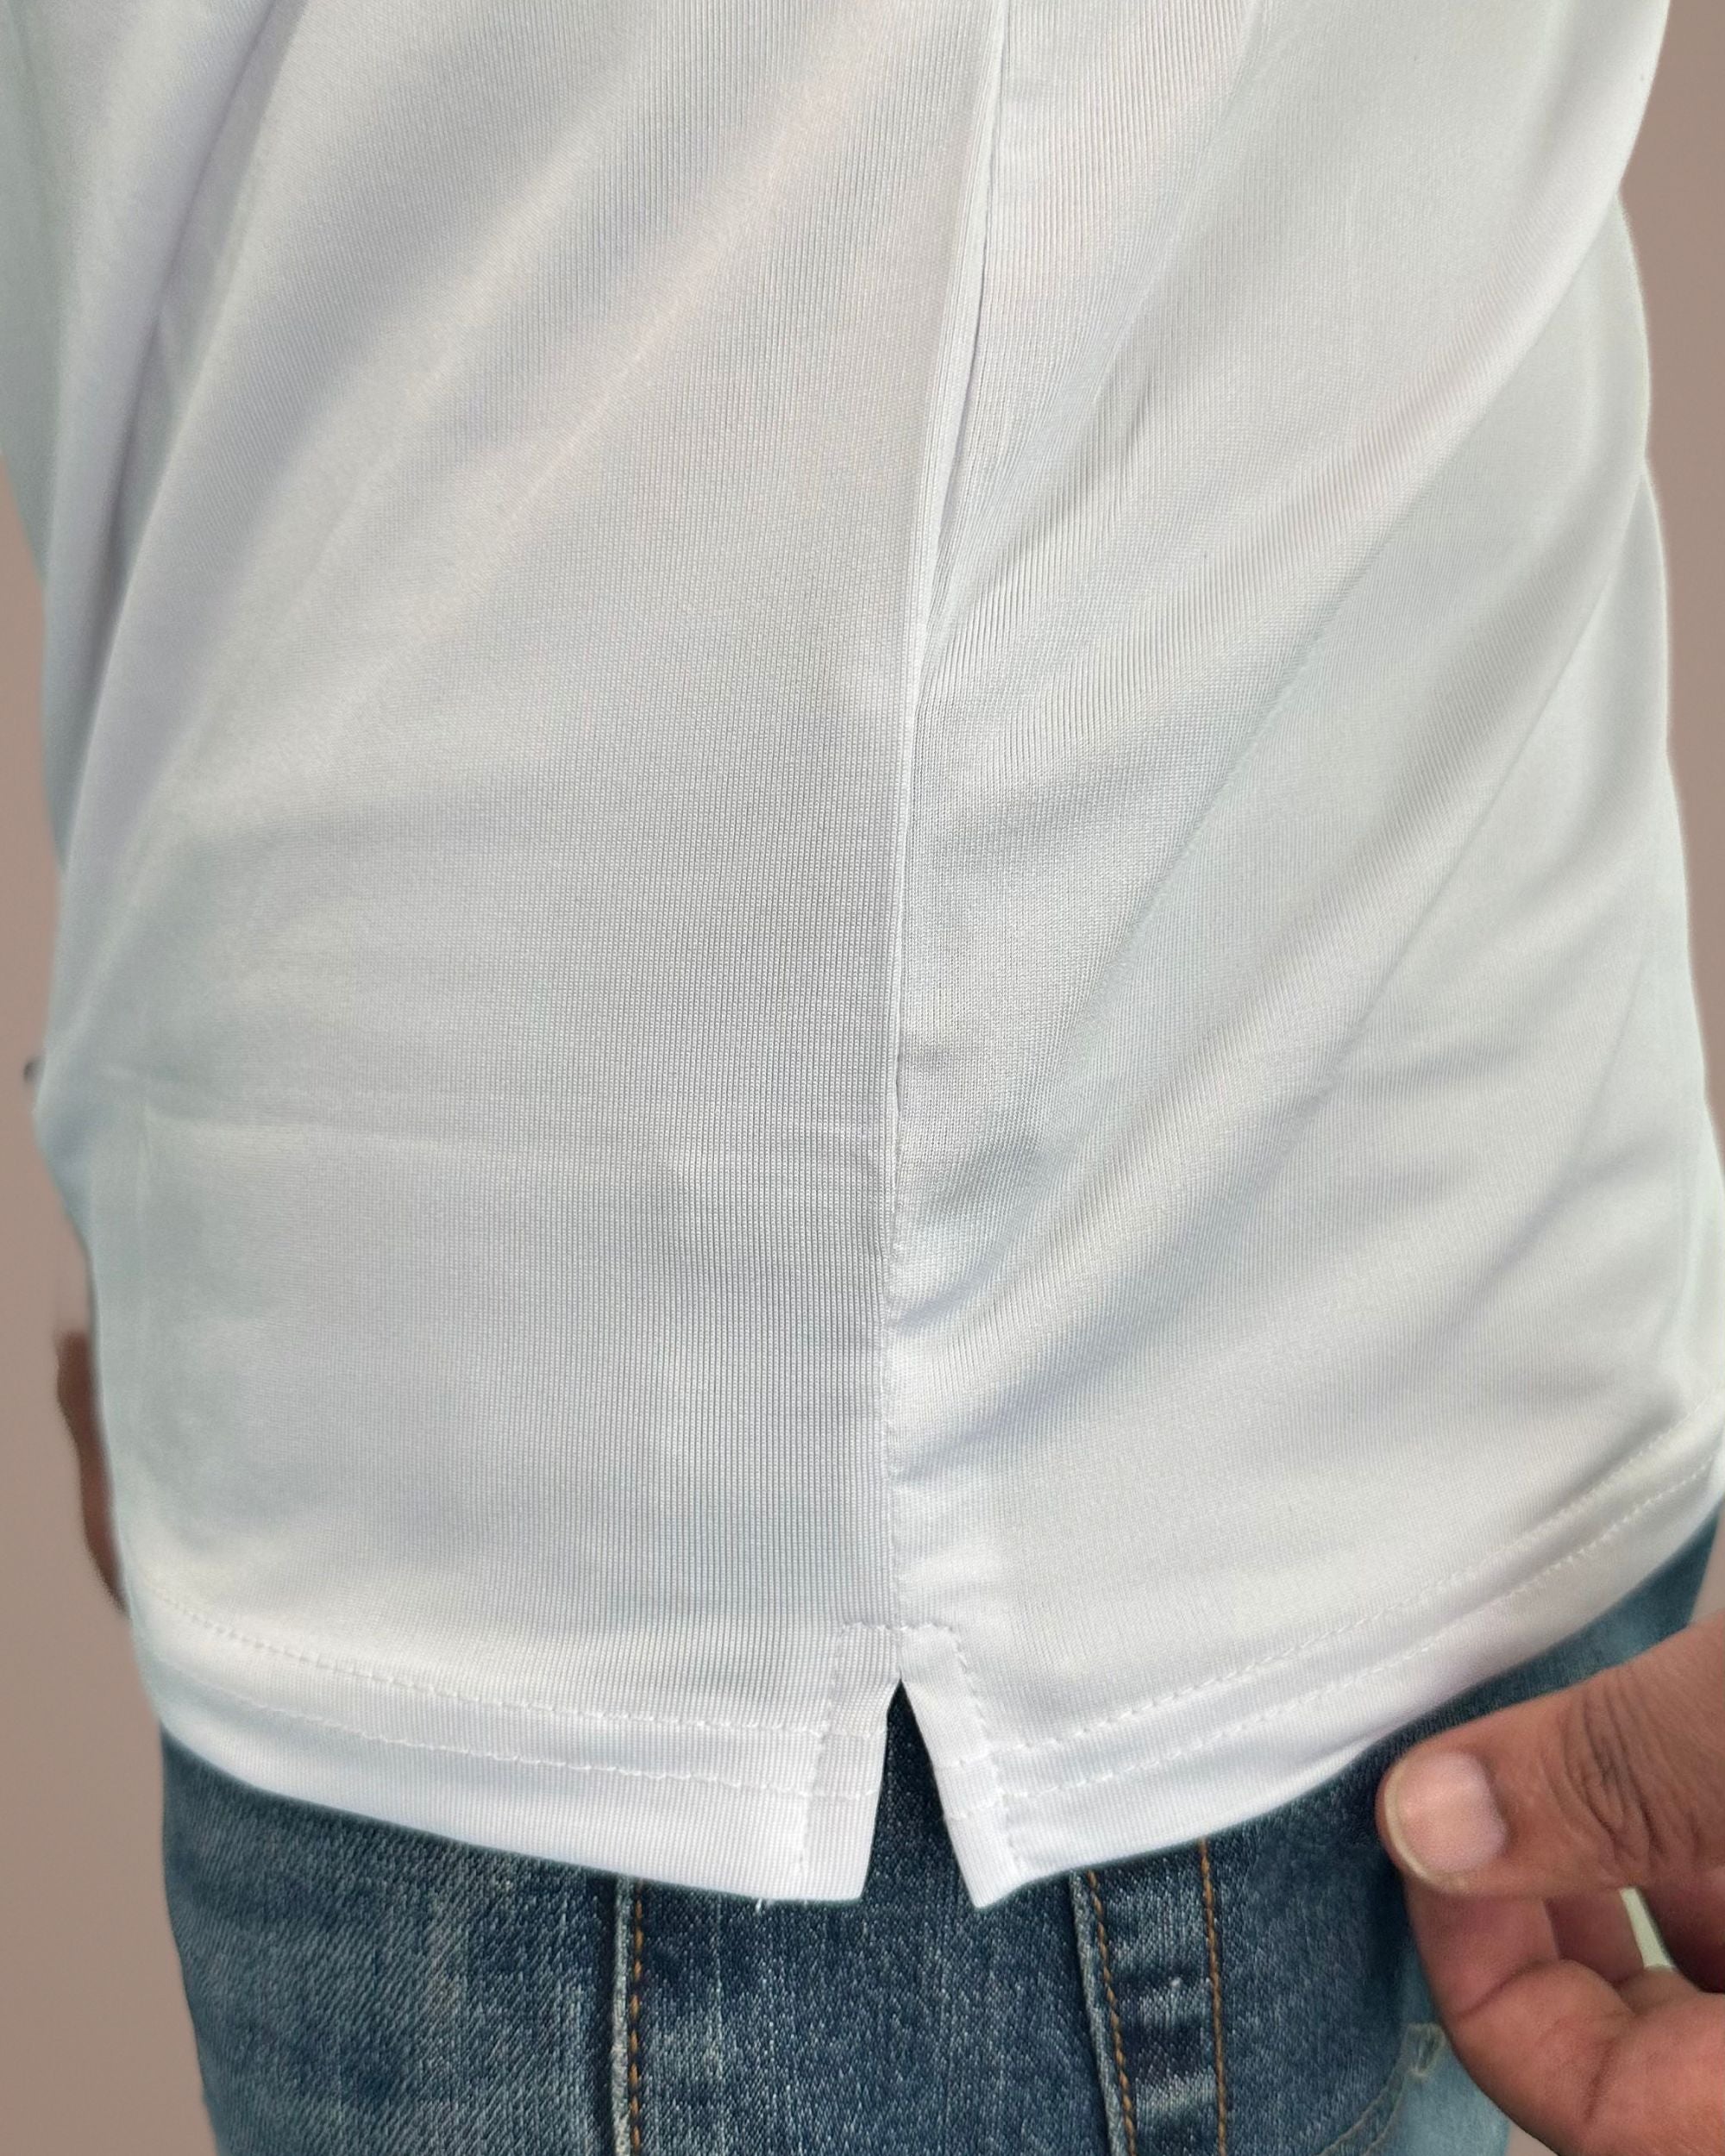 LiftRift Sleeveless Men's Slim Fit Tank Top - White